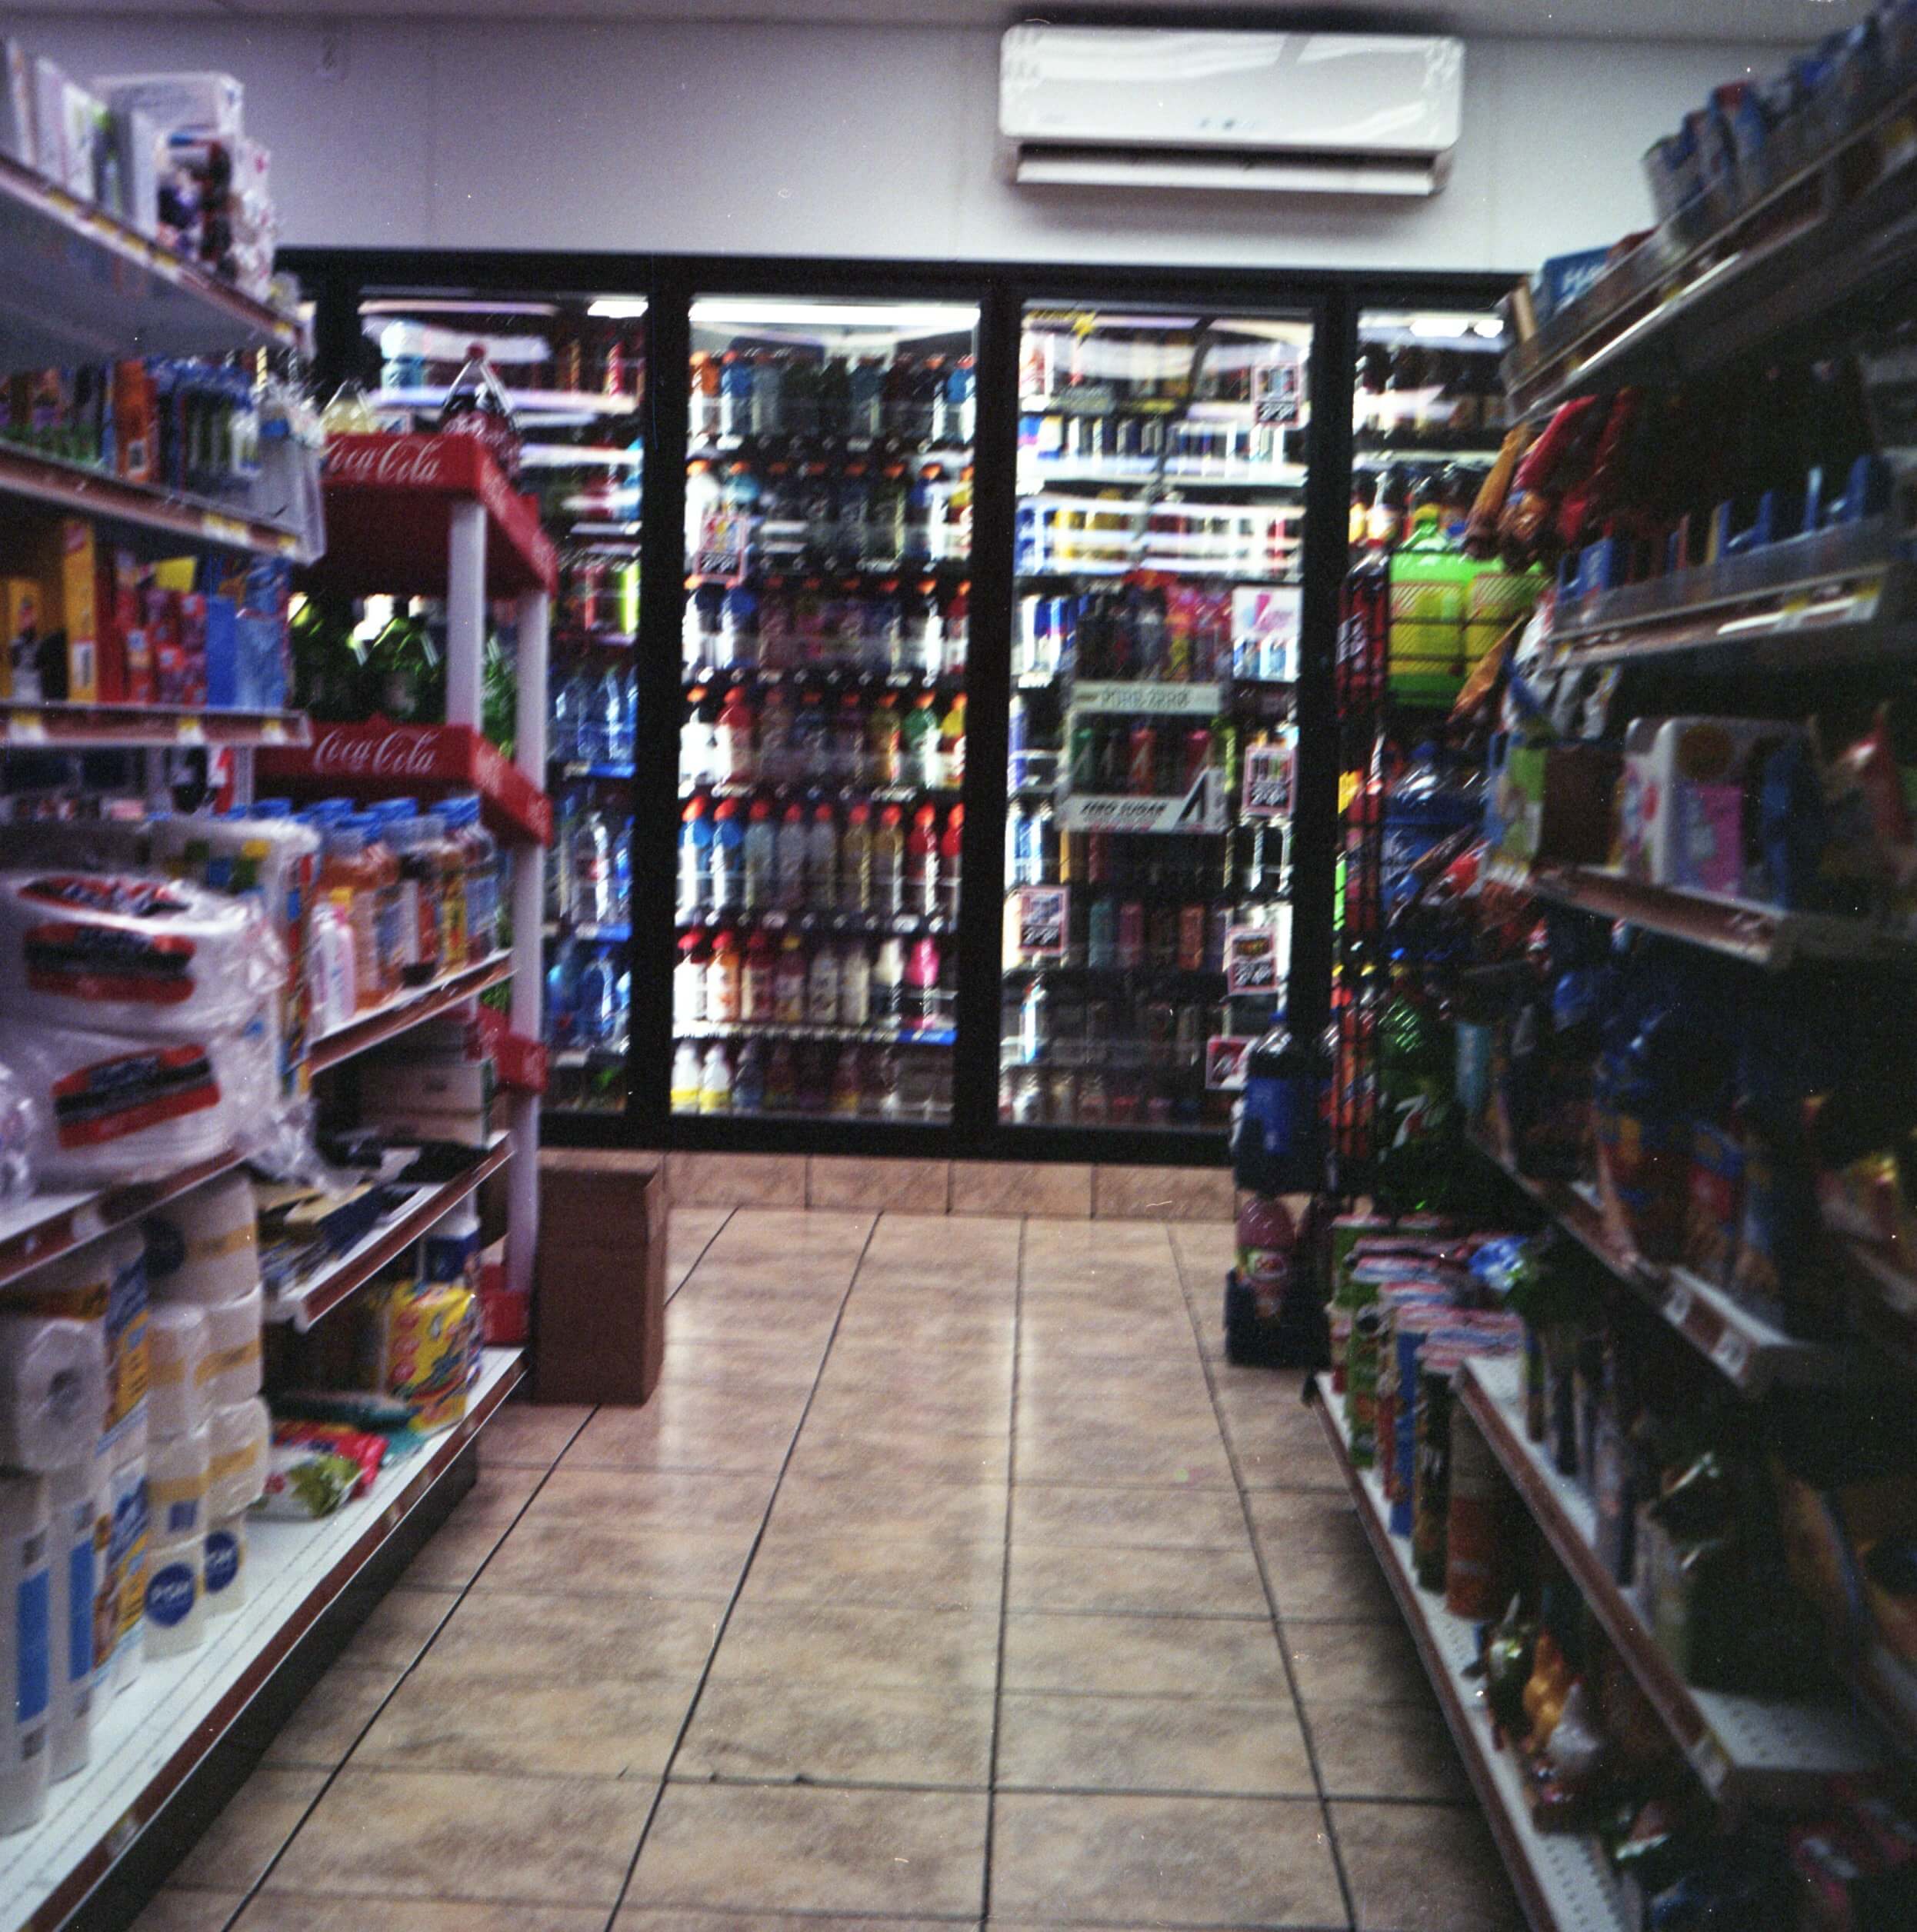 E-Z Stop Grocery & Gas corner store